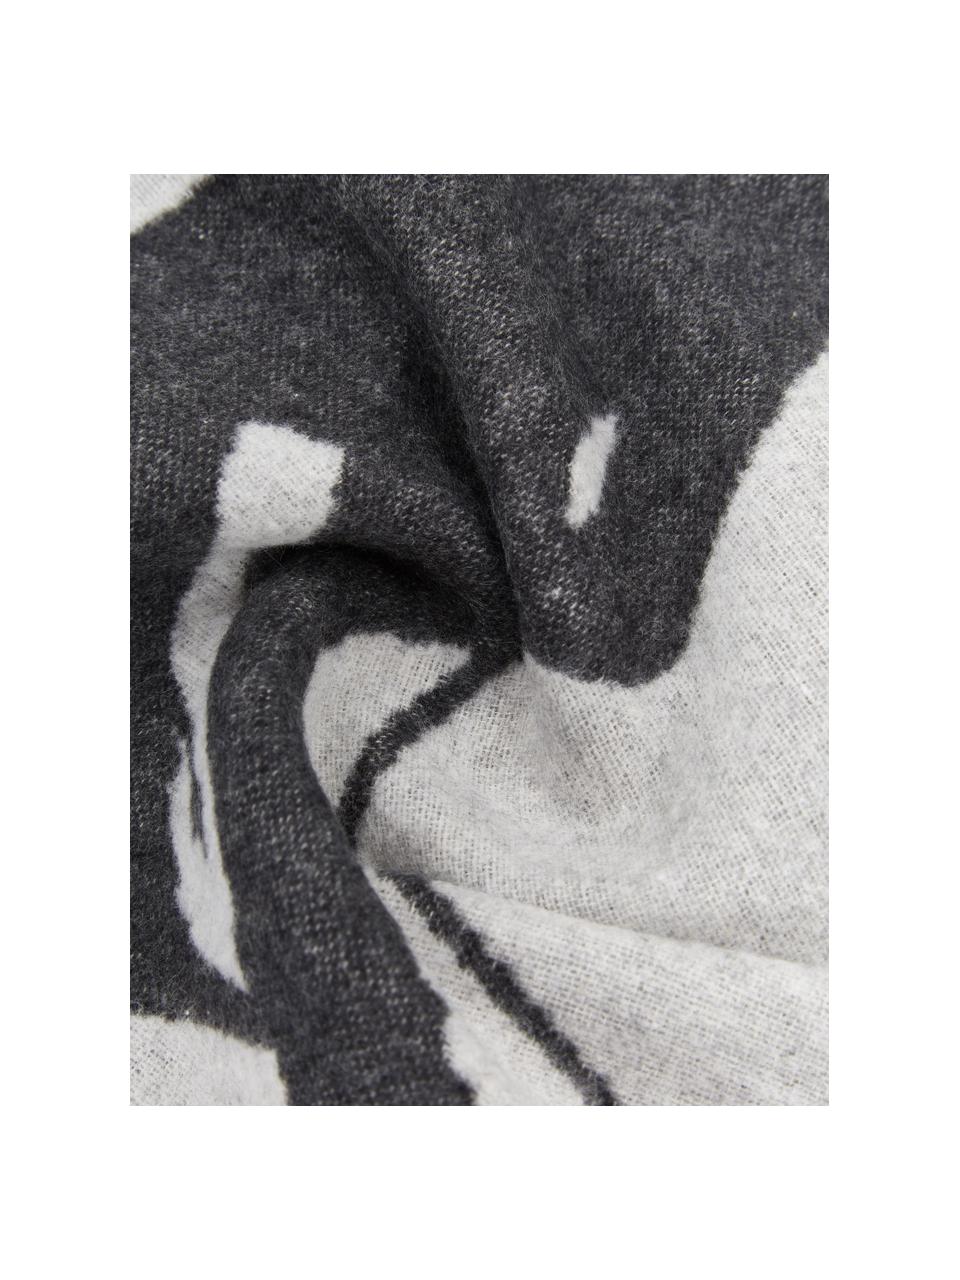 Povlak na polštář Skiers, 85 % bavlna, 15 % polyakrylát, Světle šedá, šedá, Š 50 cm, D 50 cm